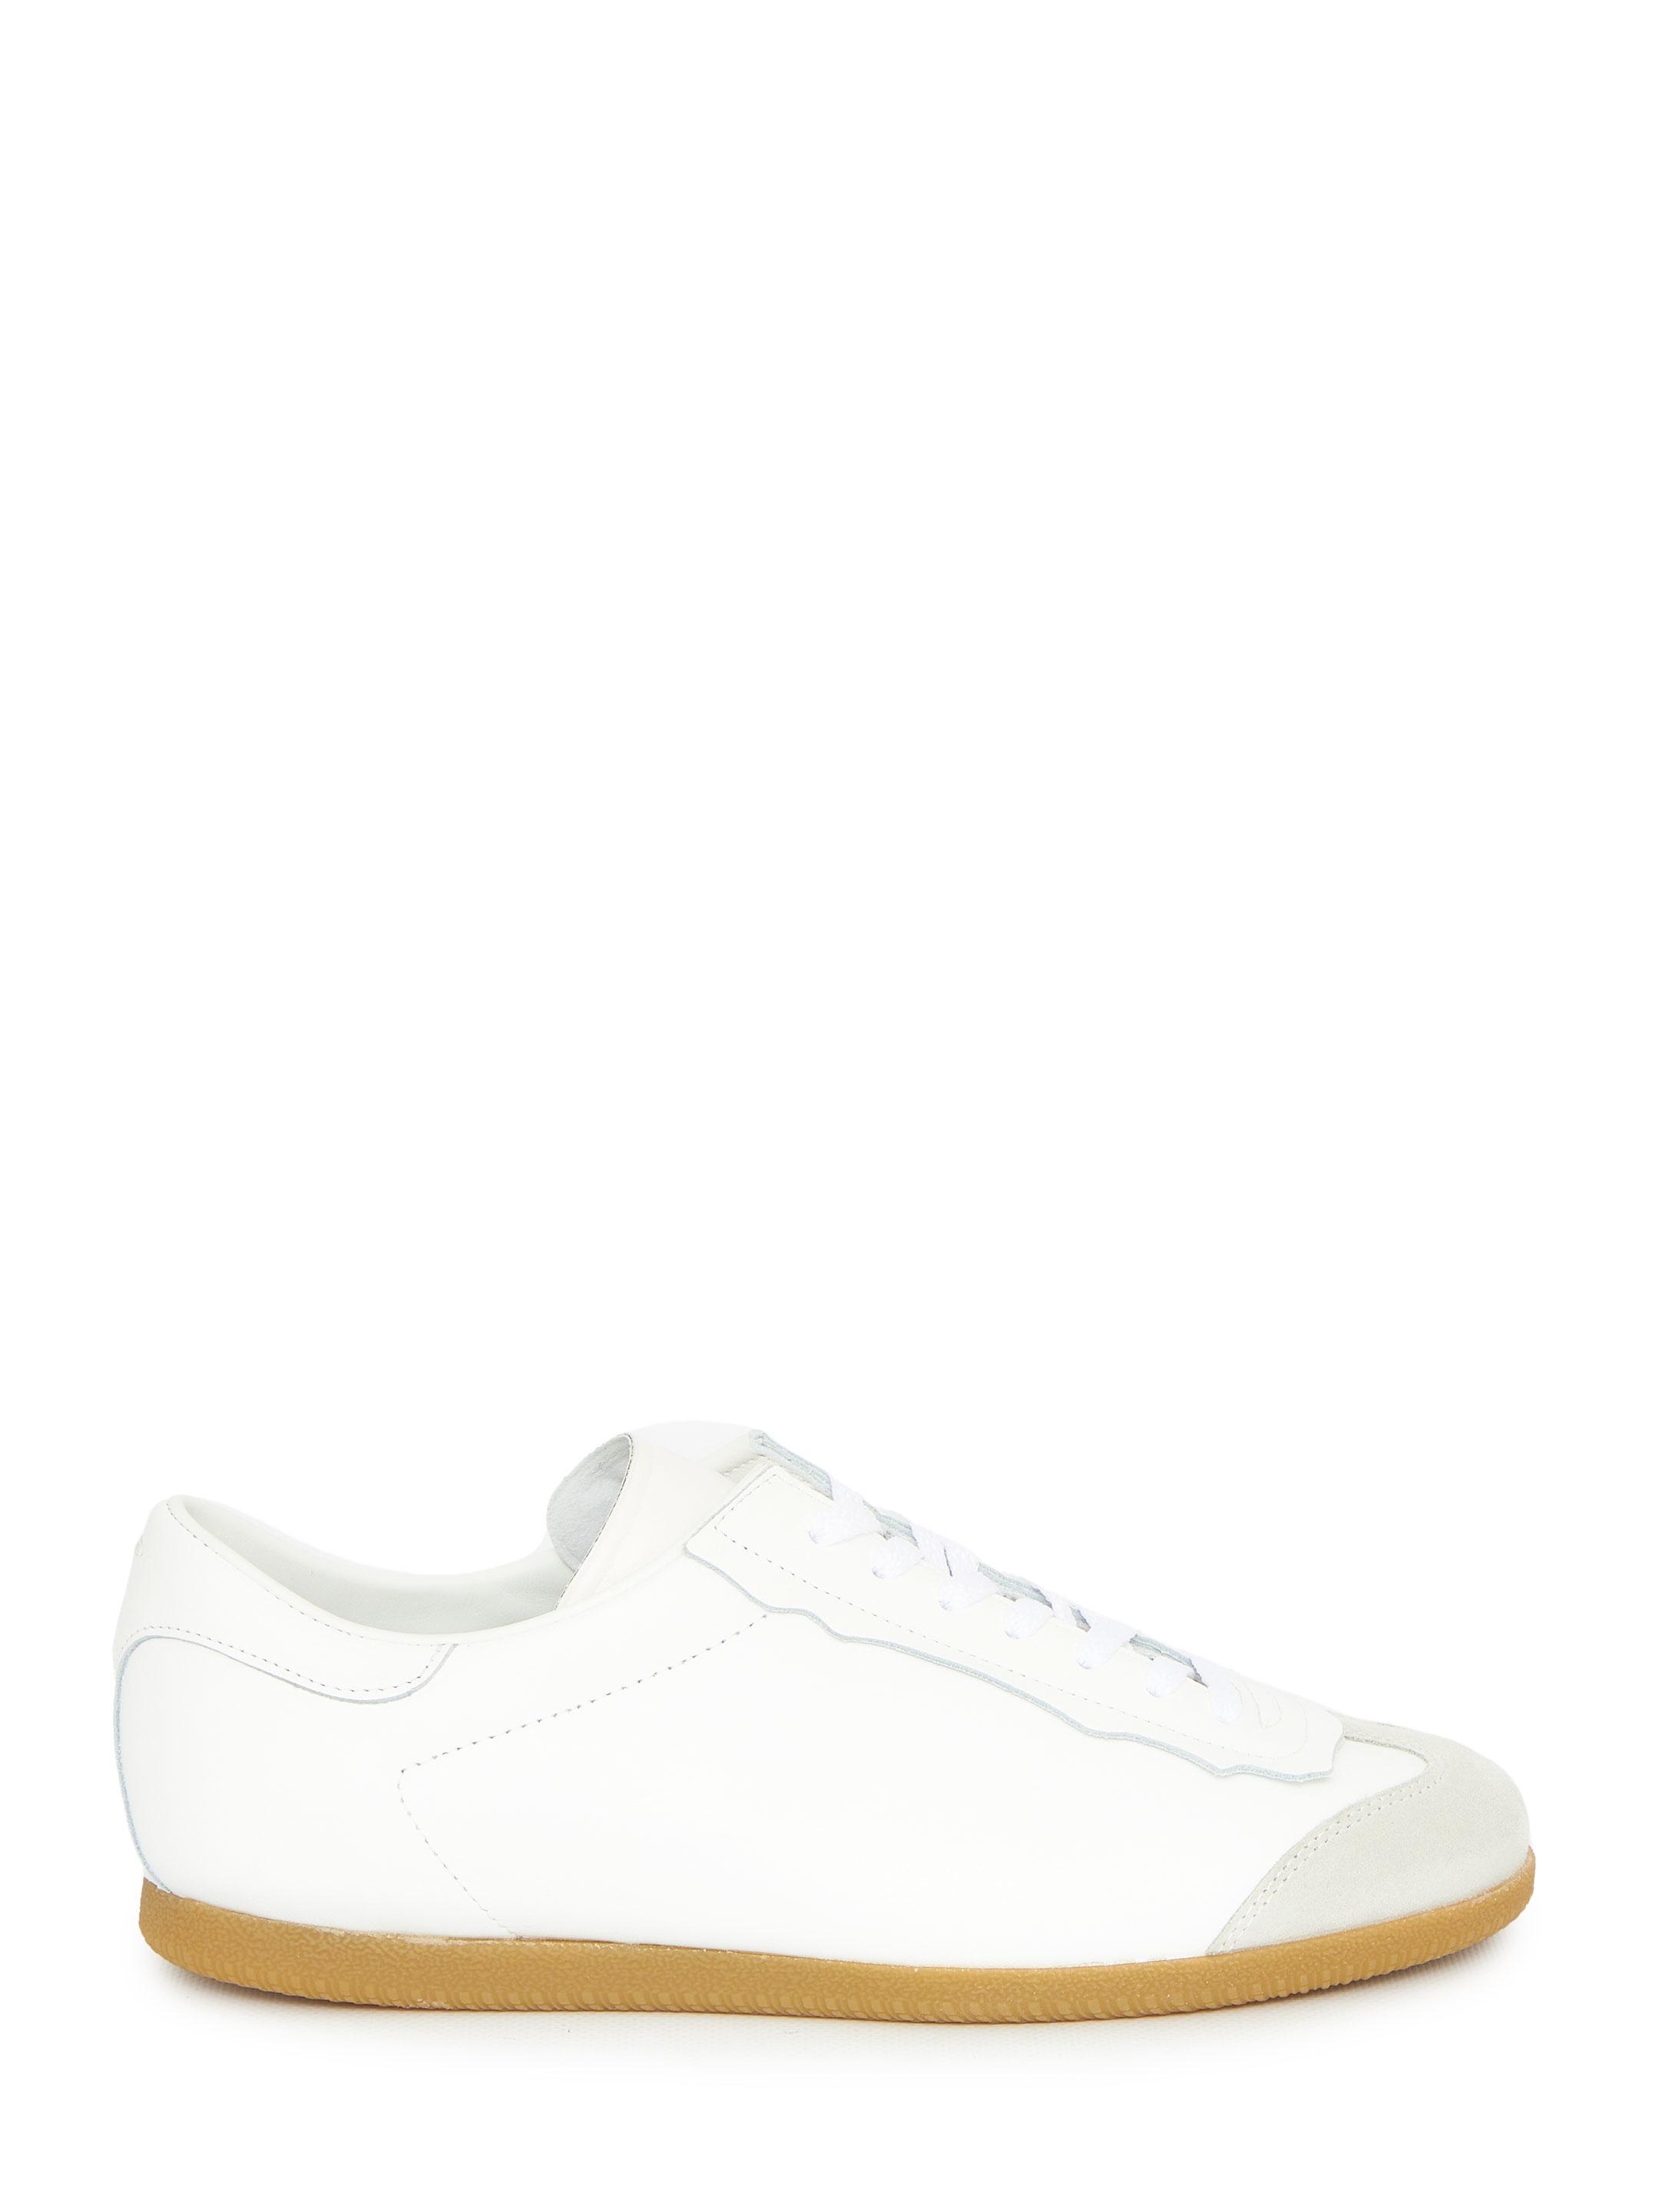 Maison Margiela Featherlight Sneakers in White for Men | Lyst